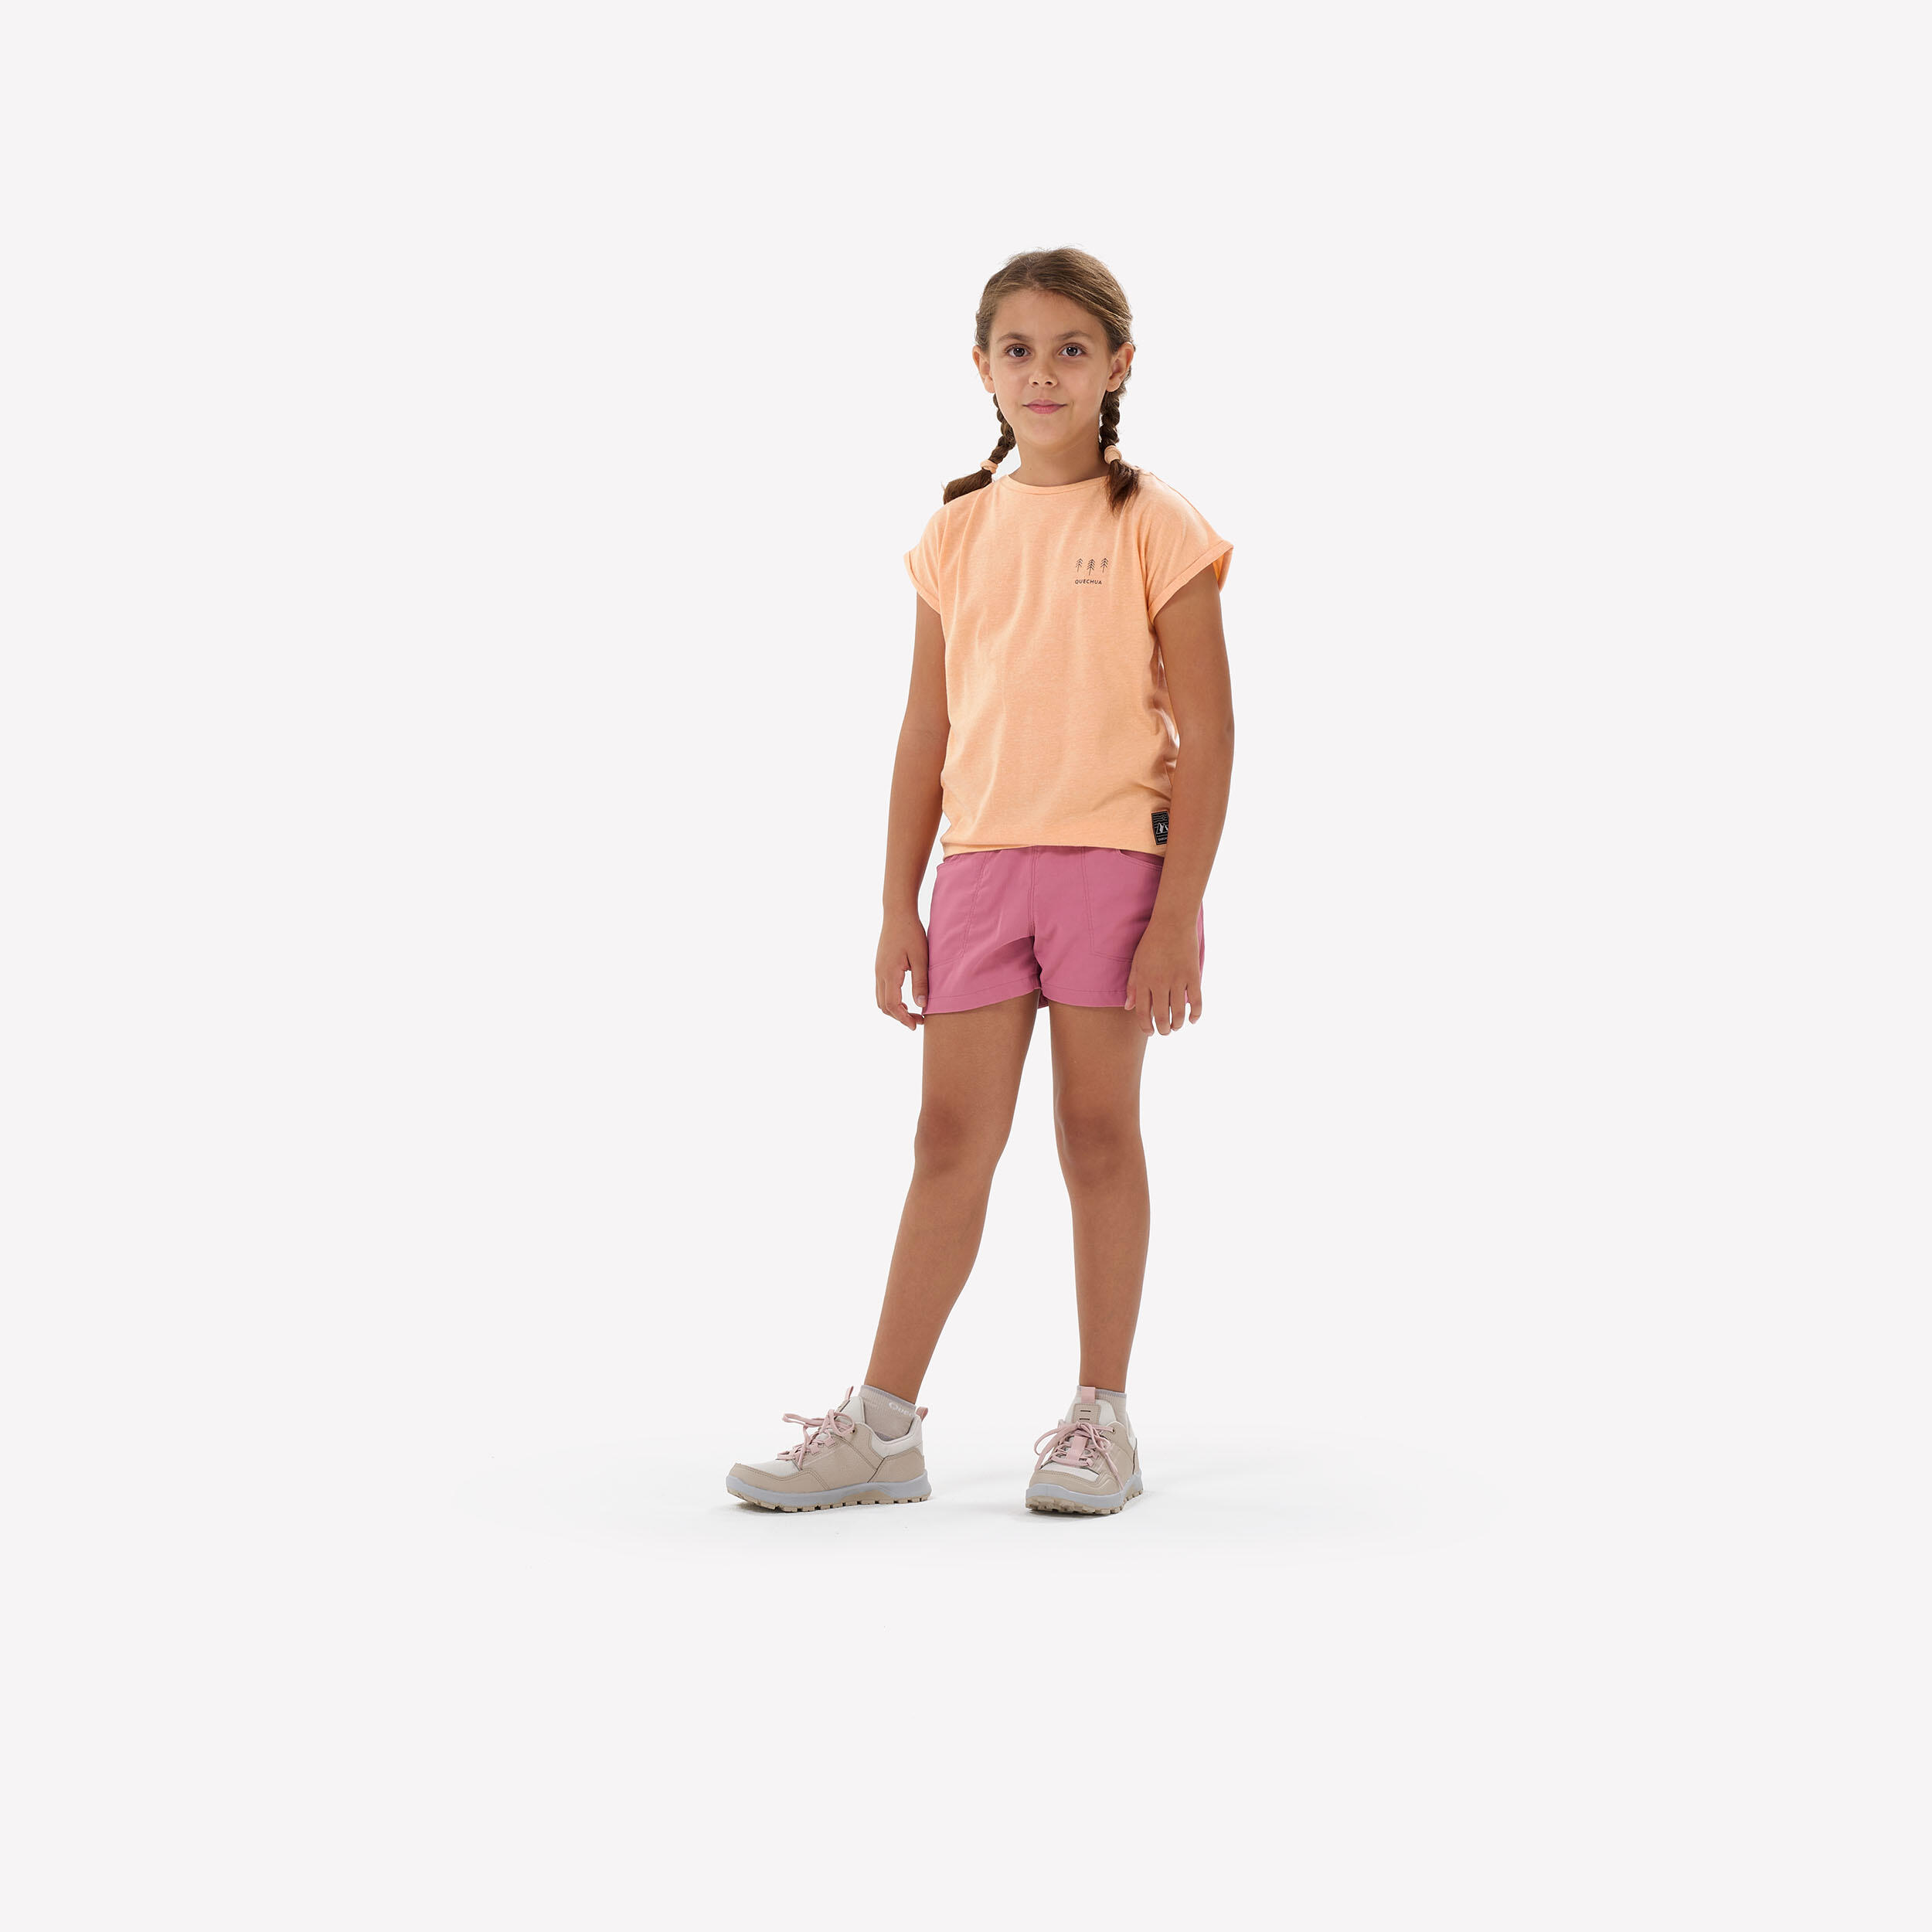 Girls’ Hiking T-shirt - MH100 Ages 7-15 - Orange 2/6